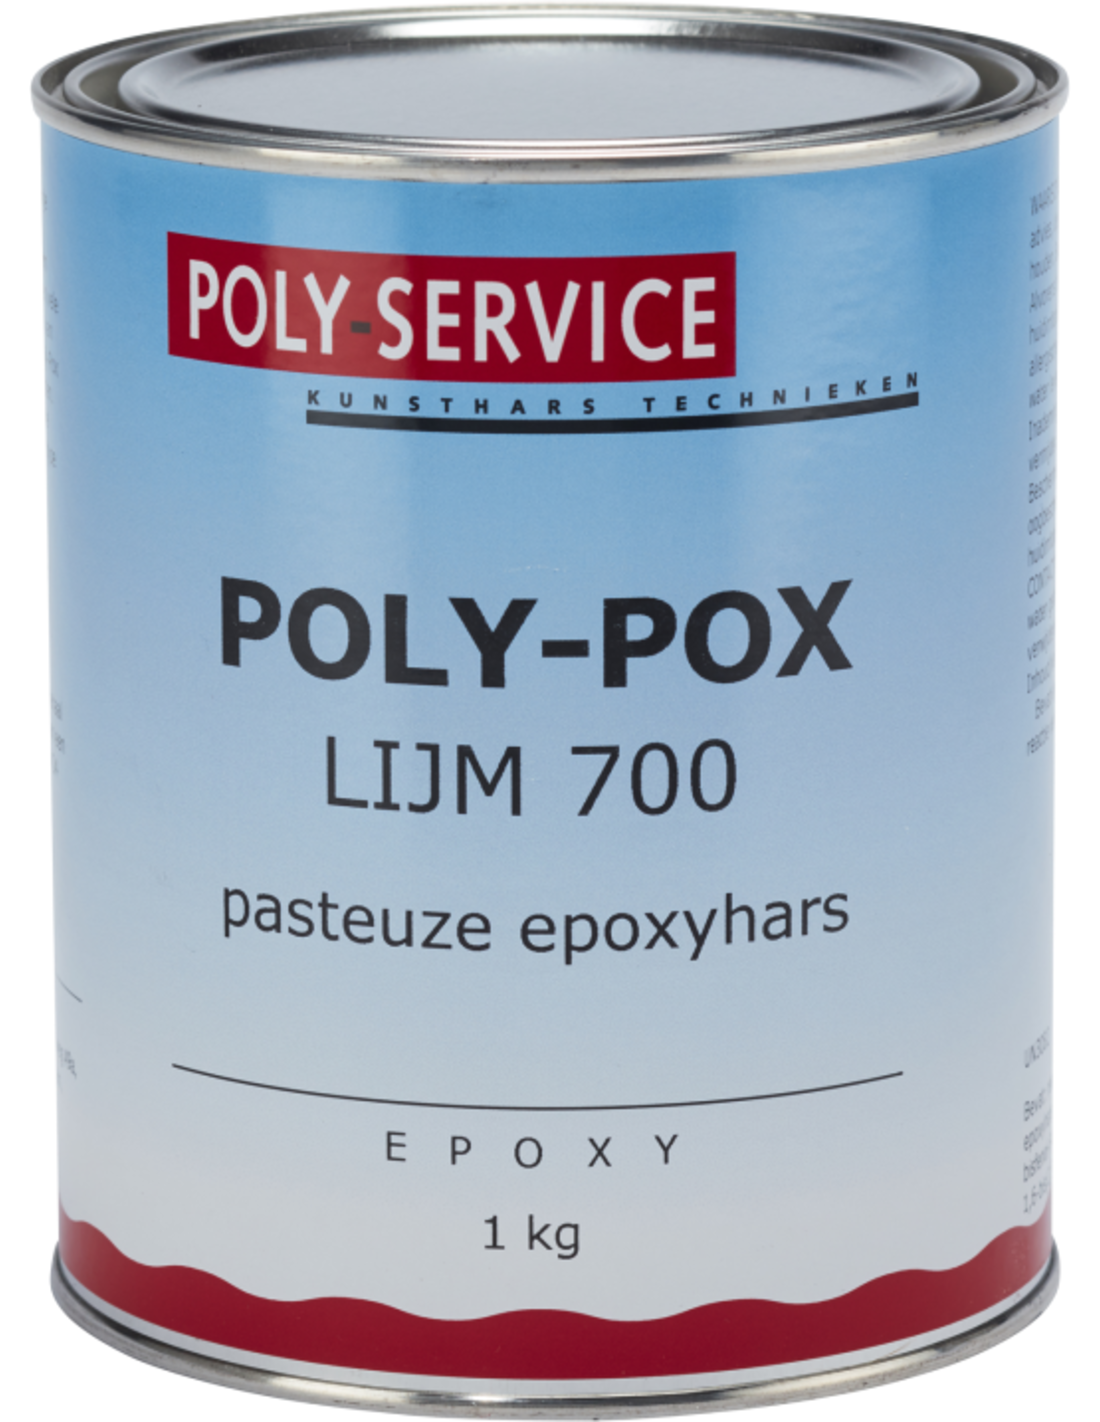 Lijm-700-pasteuze-epoxyhars.png